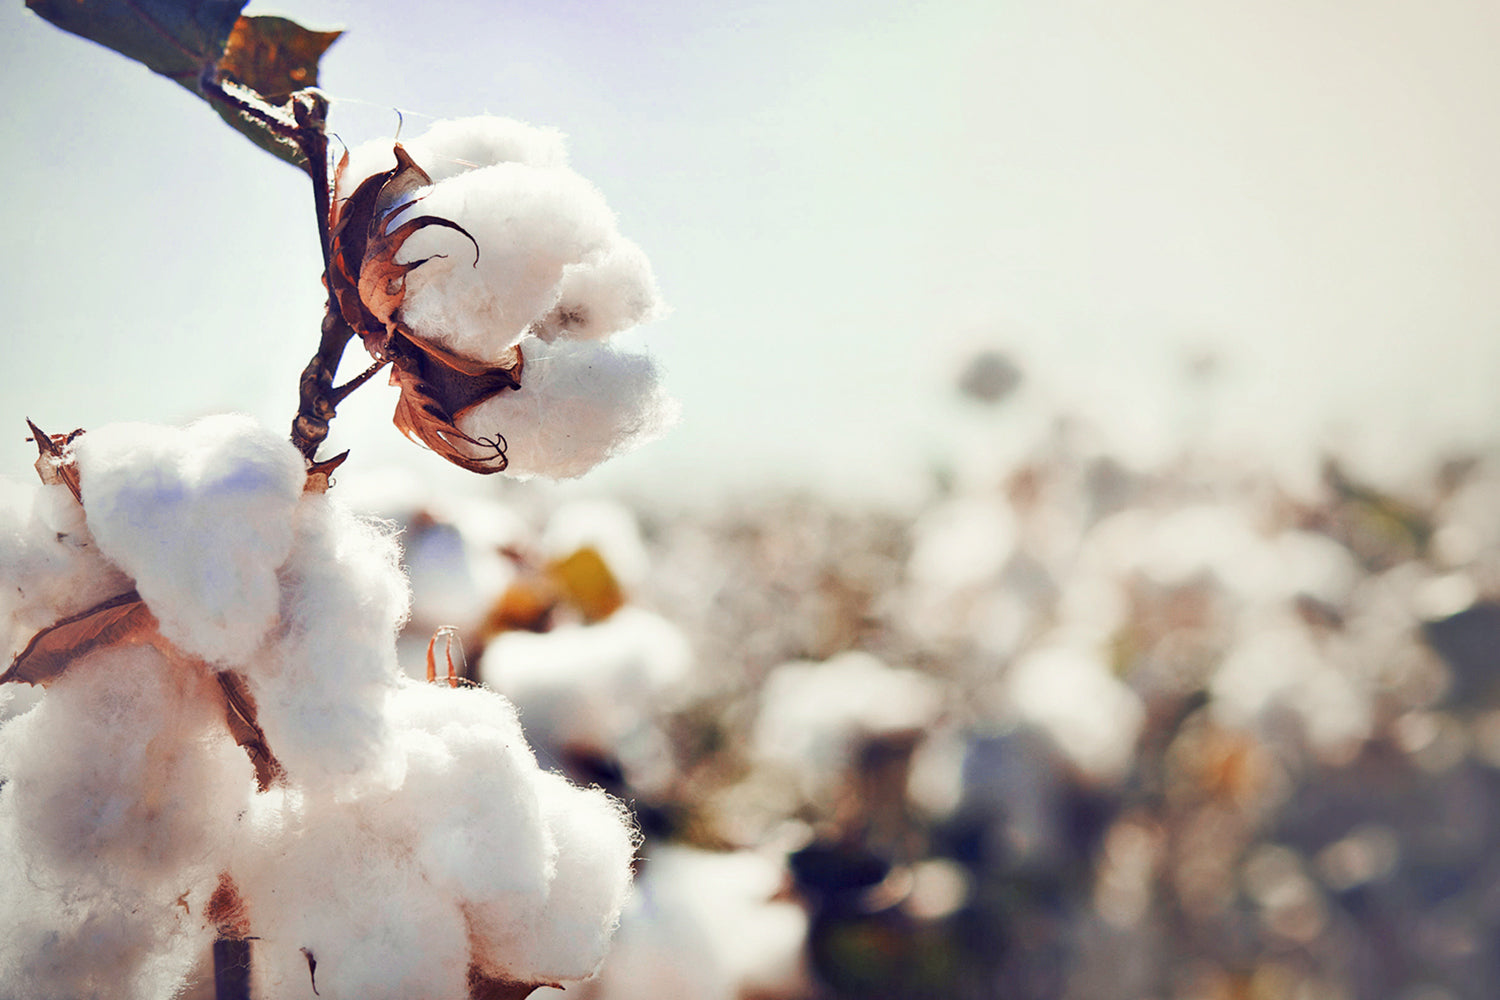 Le coton biologique, Avantage environnemental du coton Bio